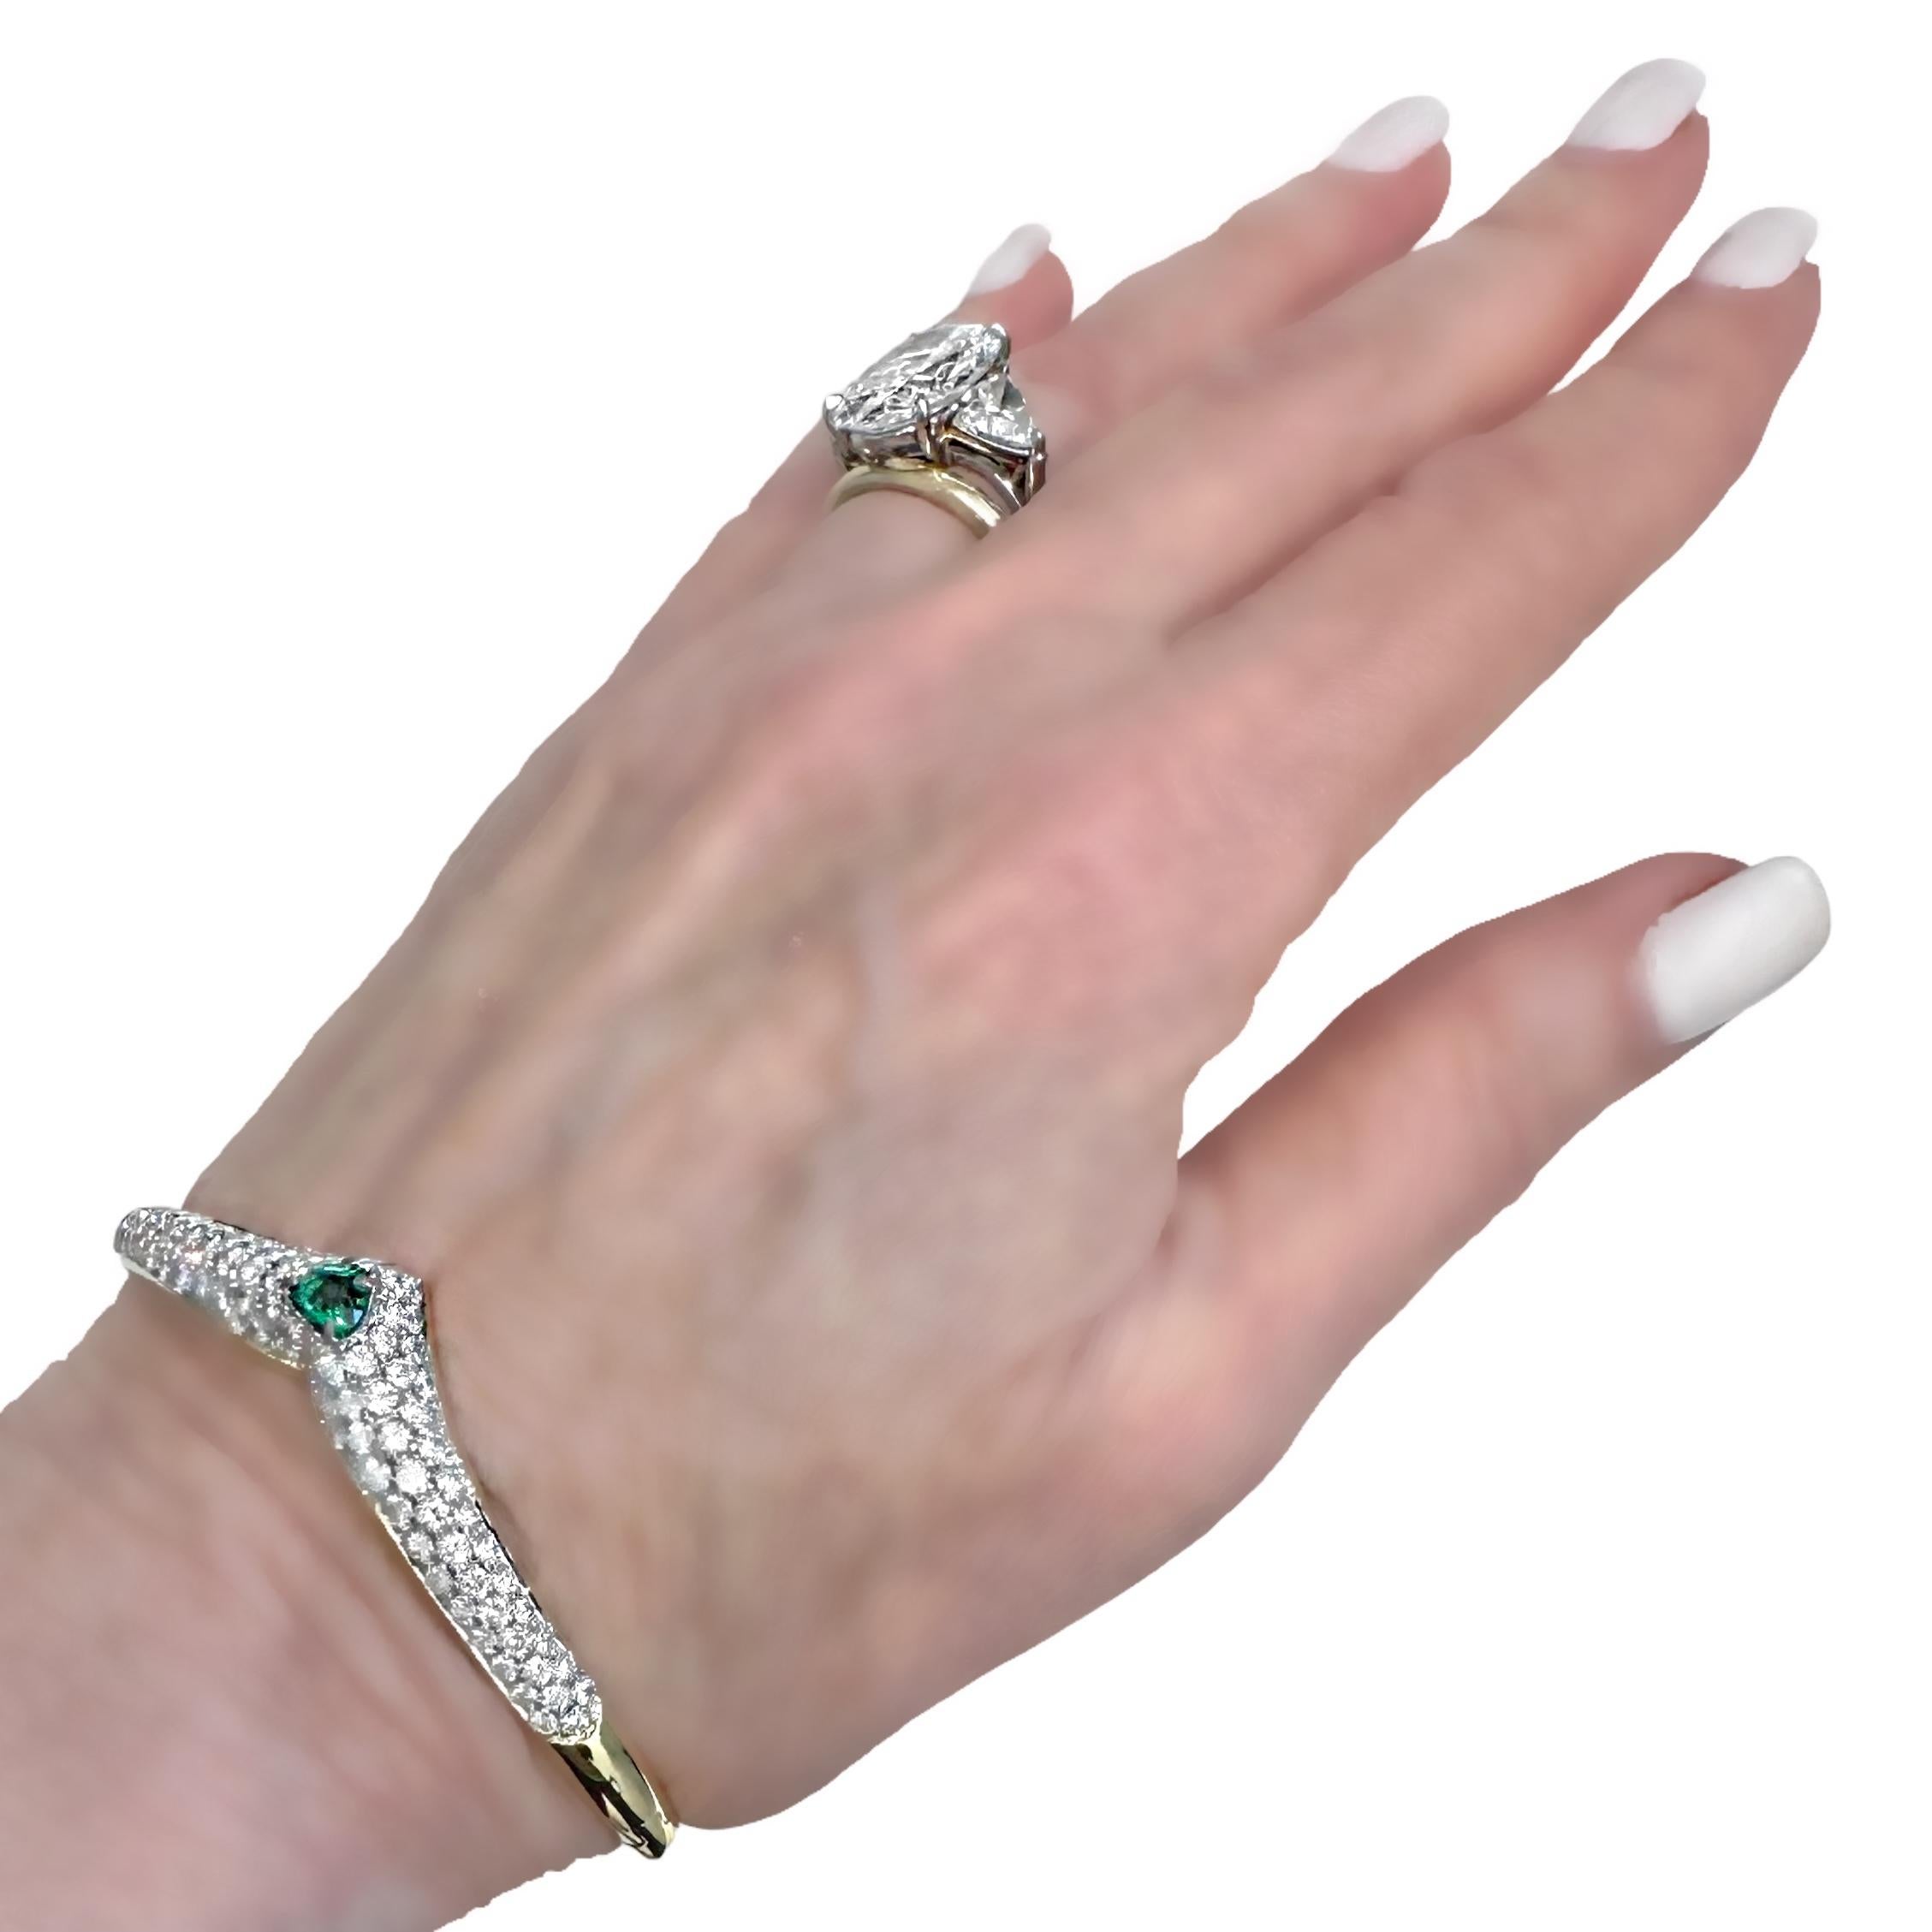  Stylish 18k Gold Bangle Bracelet with Heart Shaped Emerald and Diamonds For Sale 5